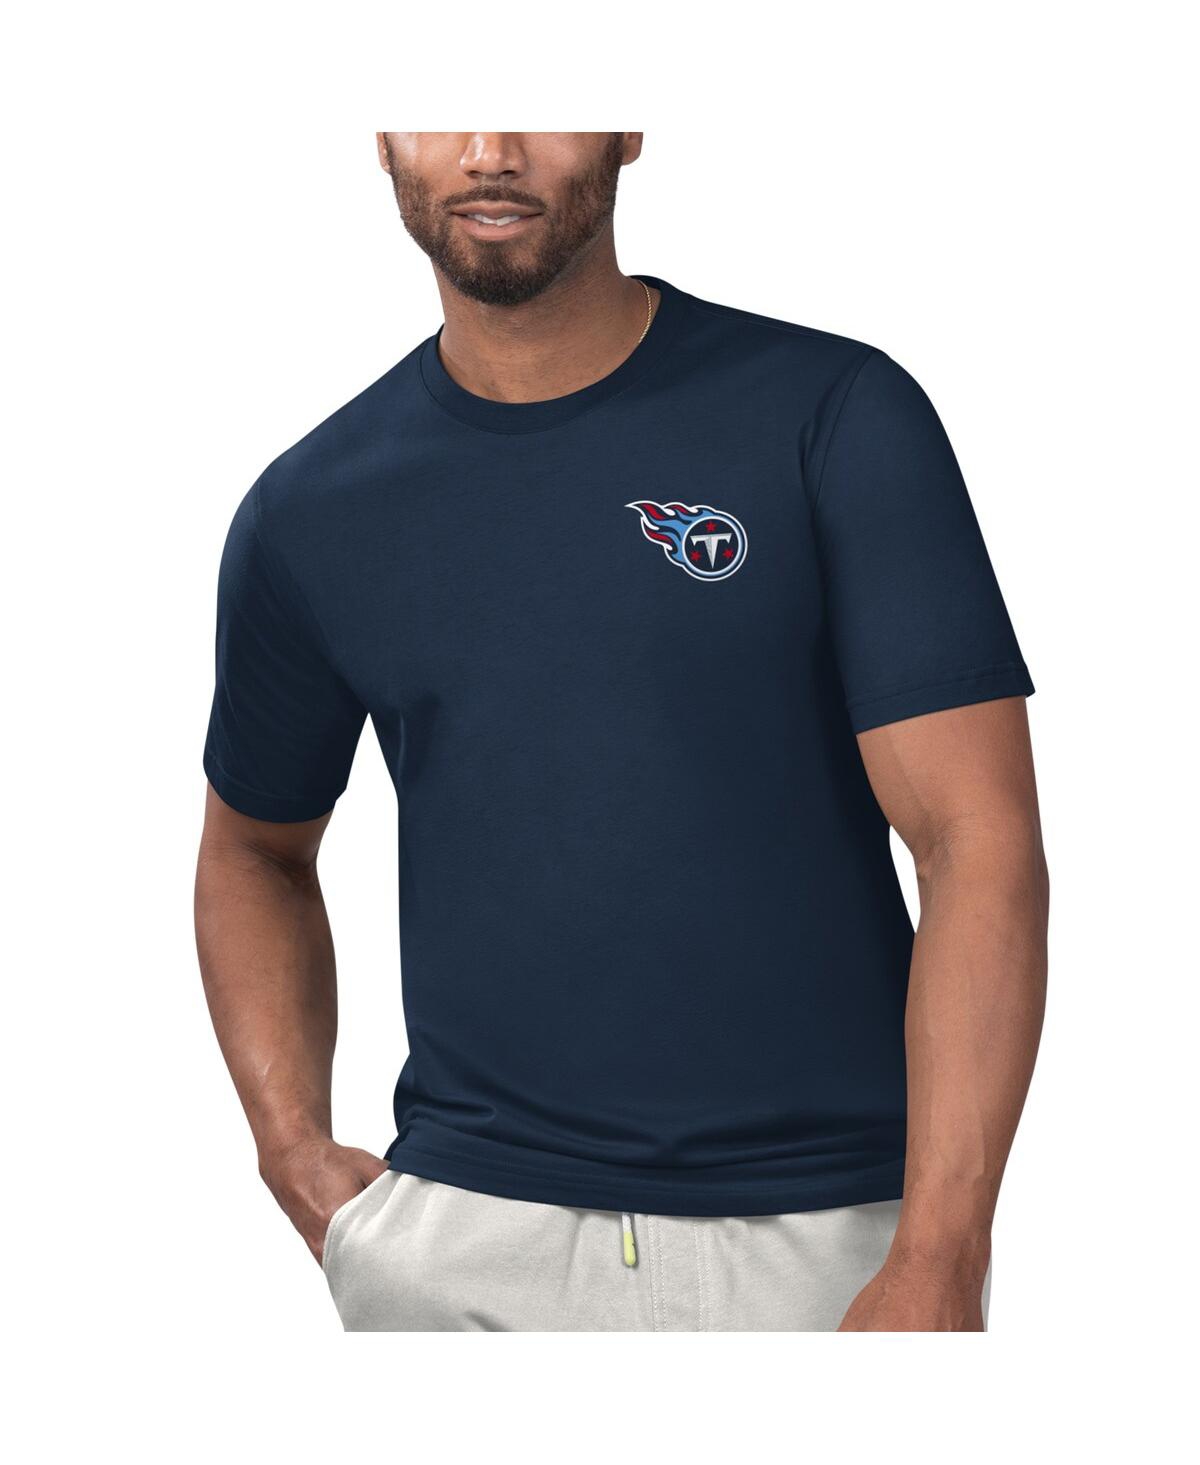 Men's Margaritaville Navy Tennessee Titans Licensed to Chill T-shirt - Navy